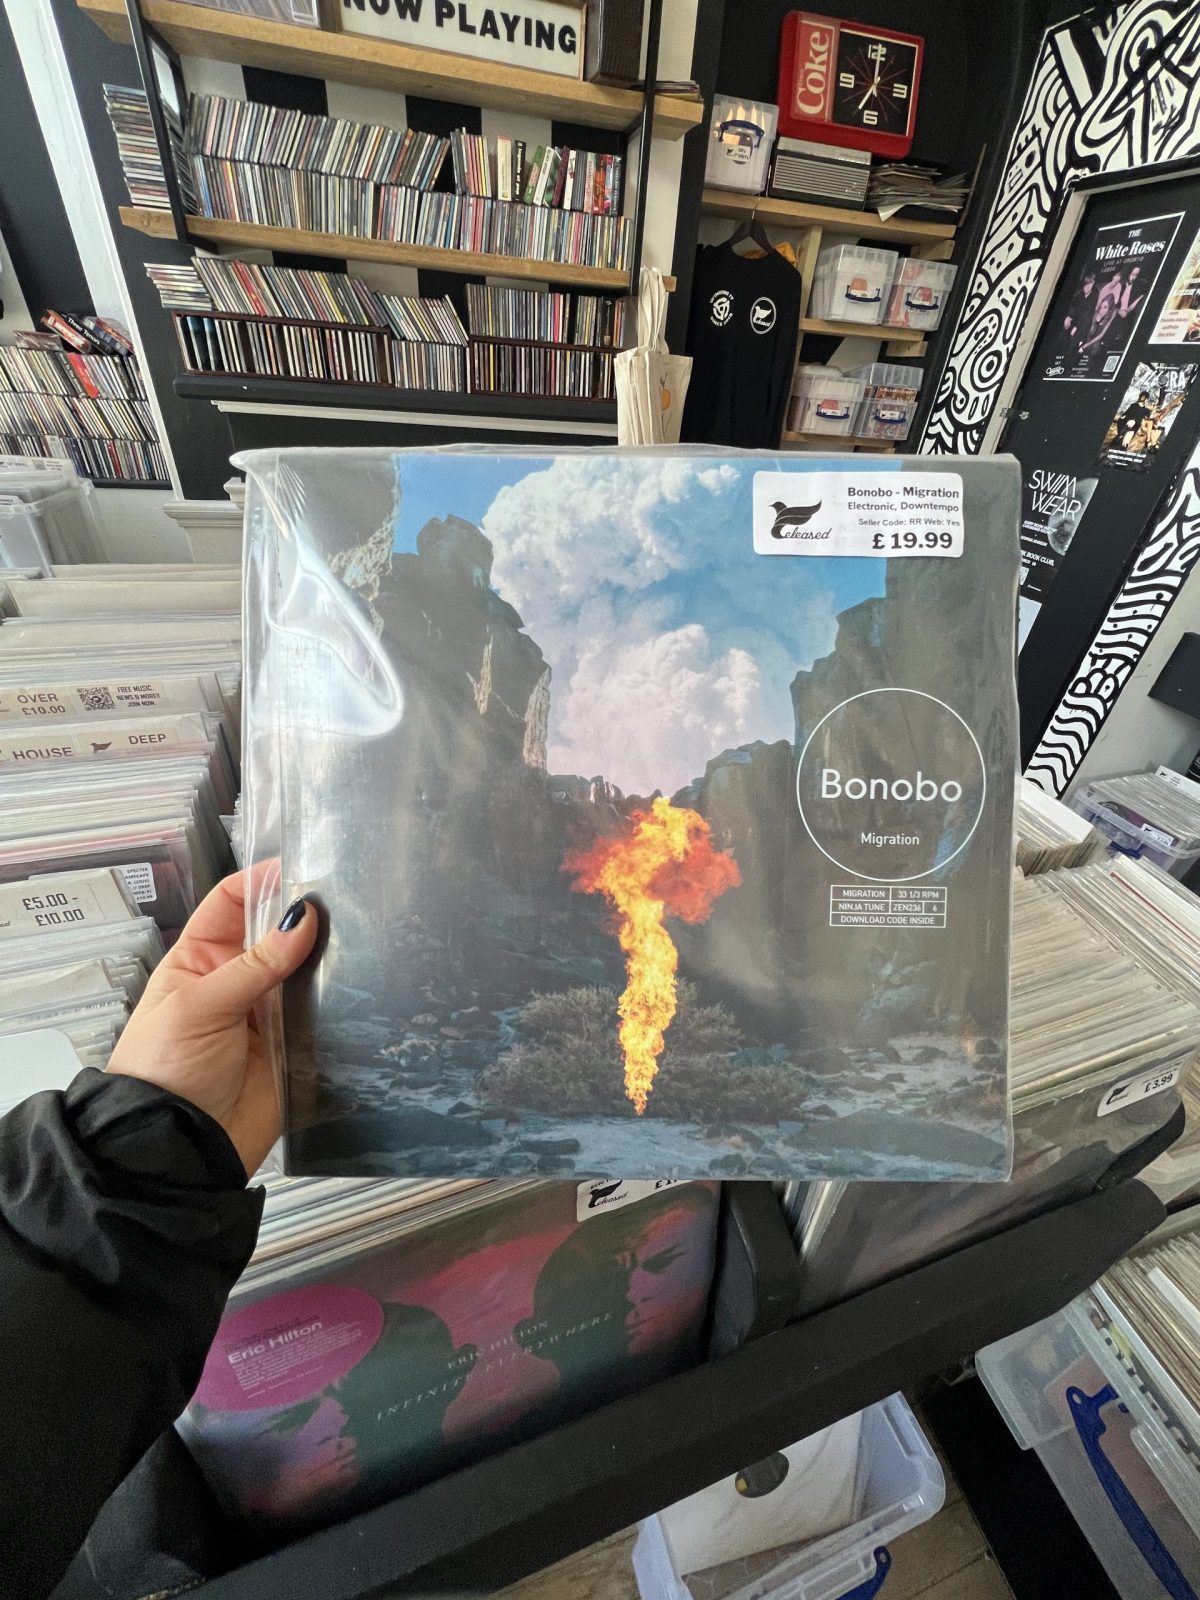 Bonobo vinyl record held up to camera.